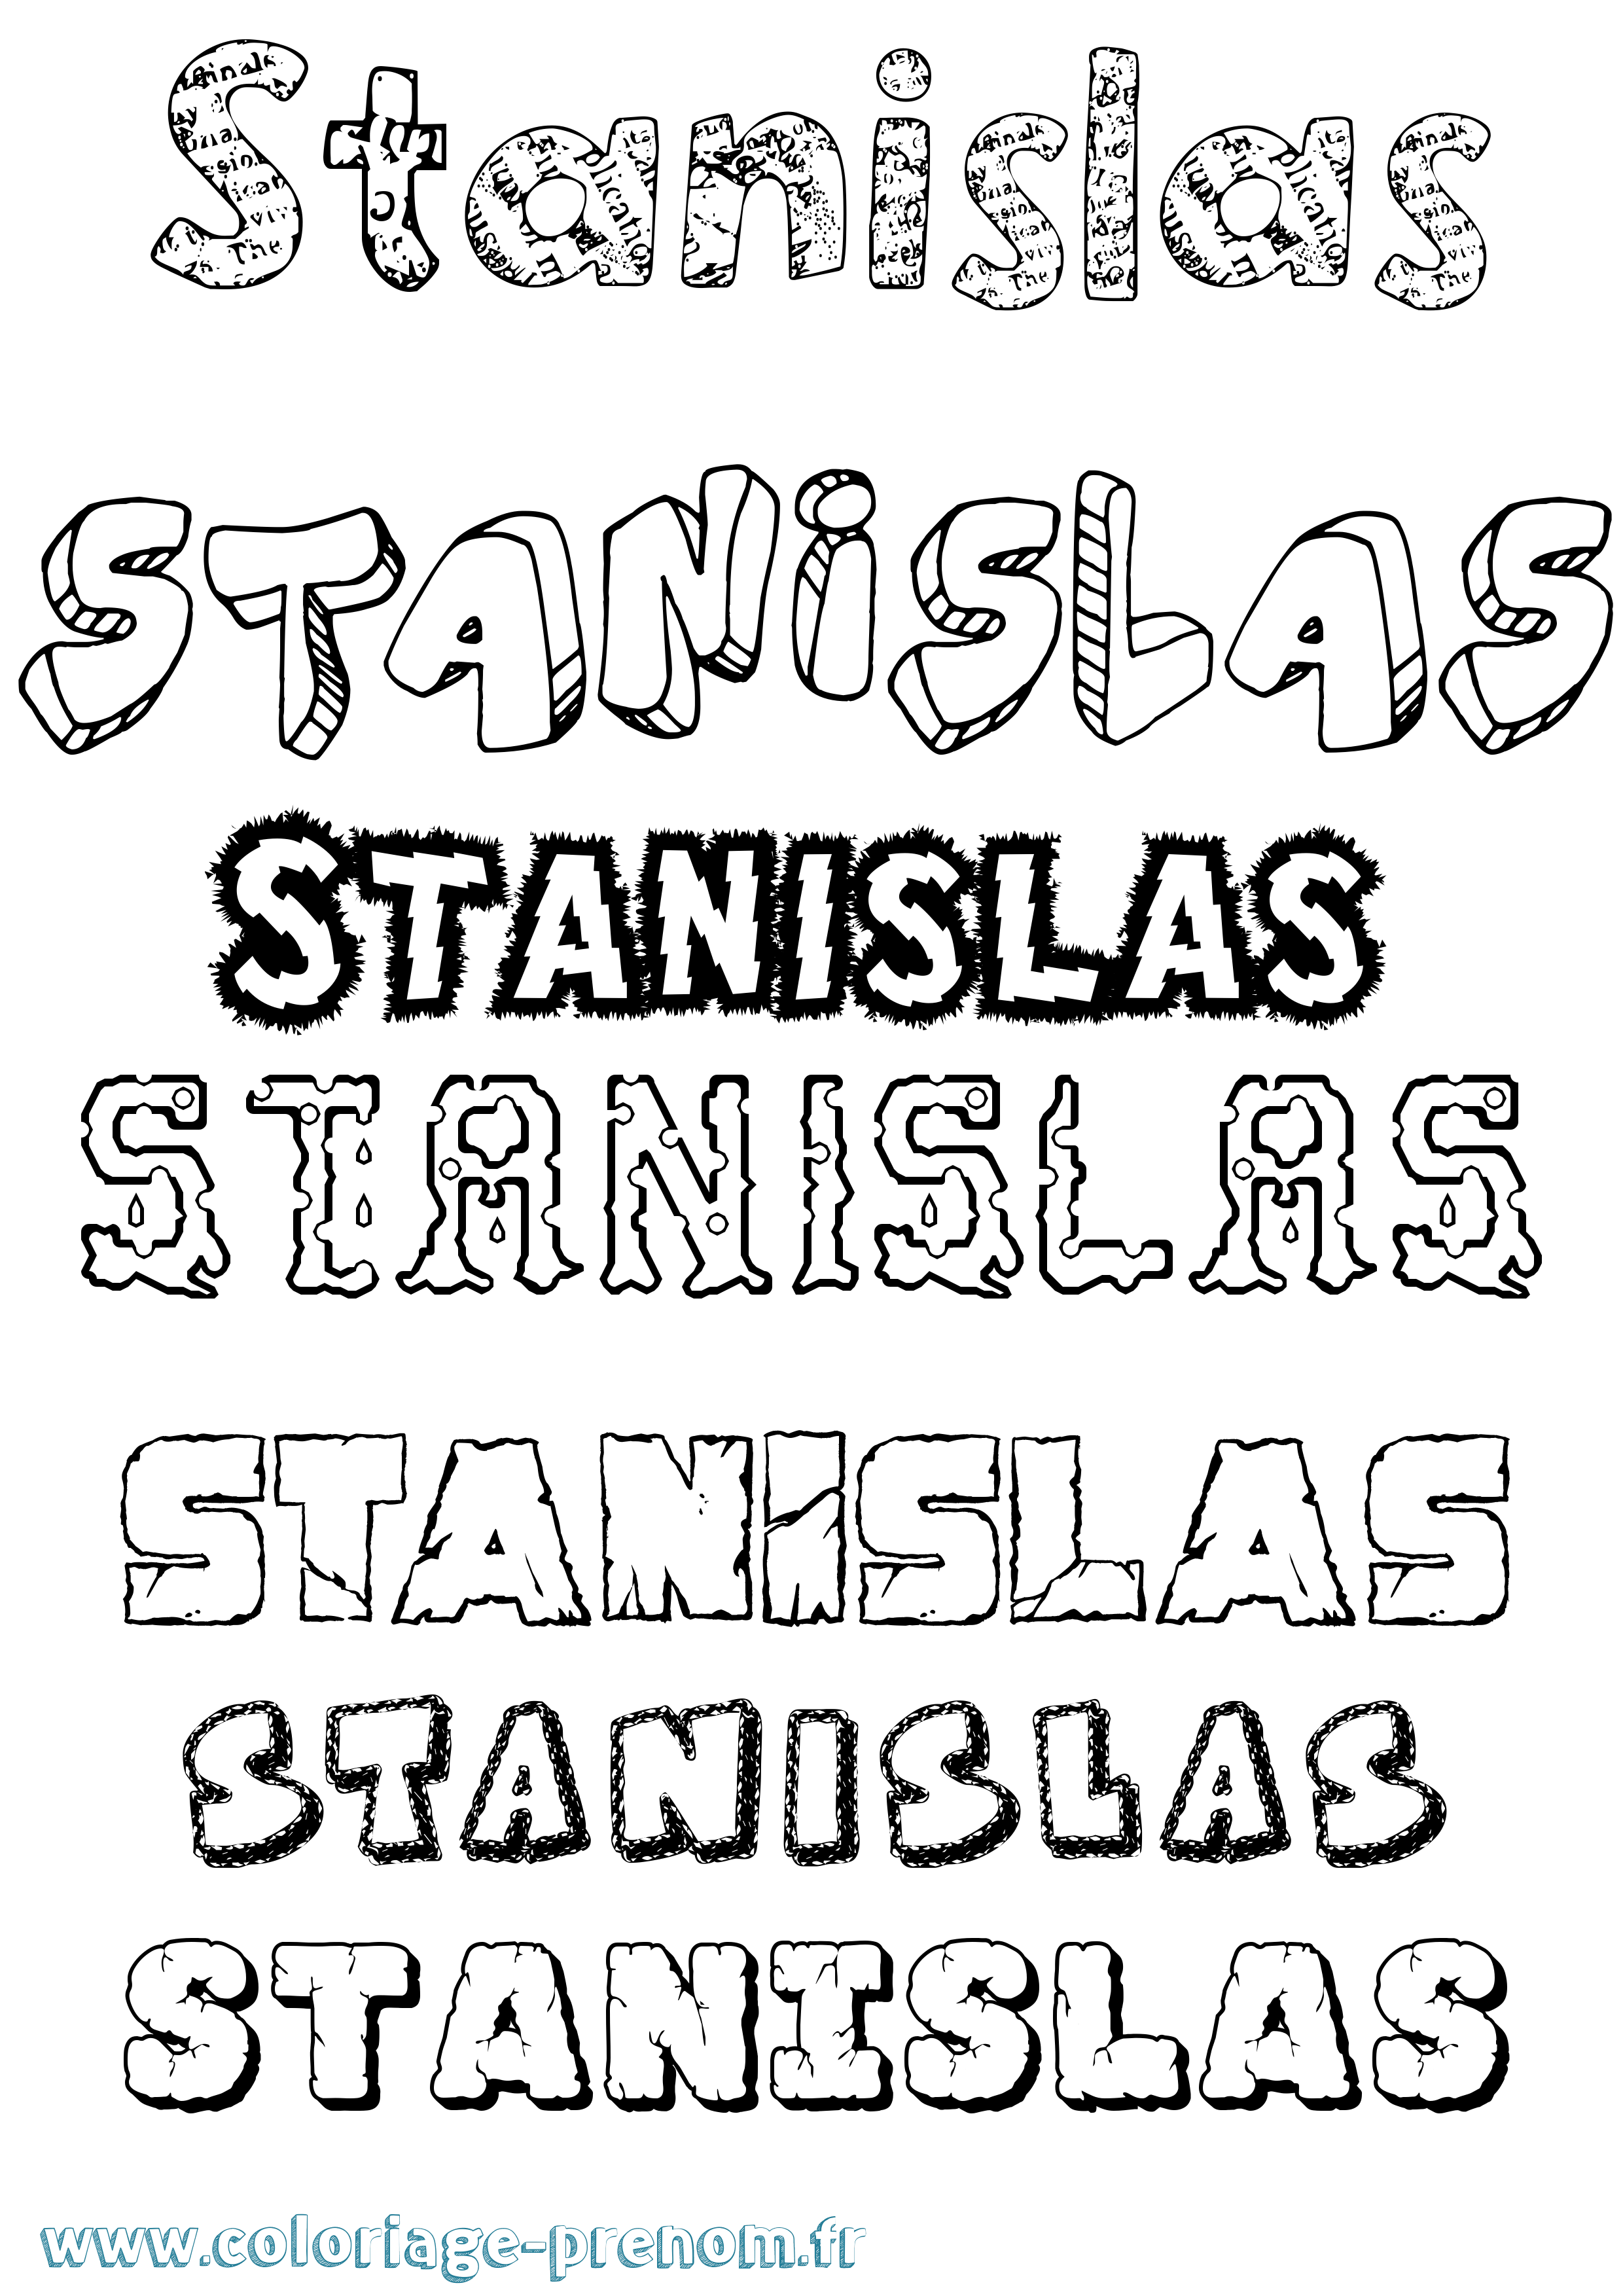 Coloriage prénom Stanislas